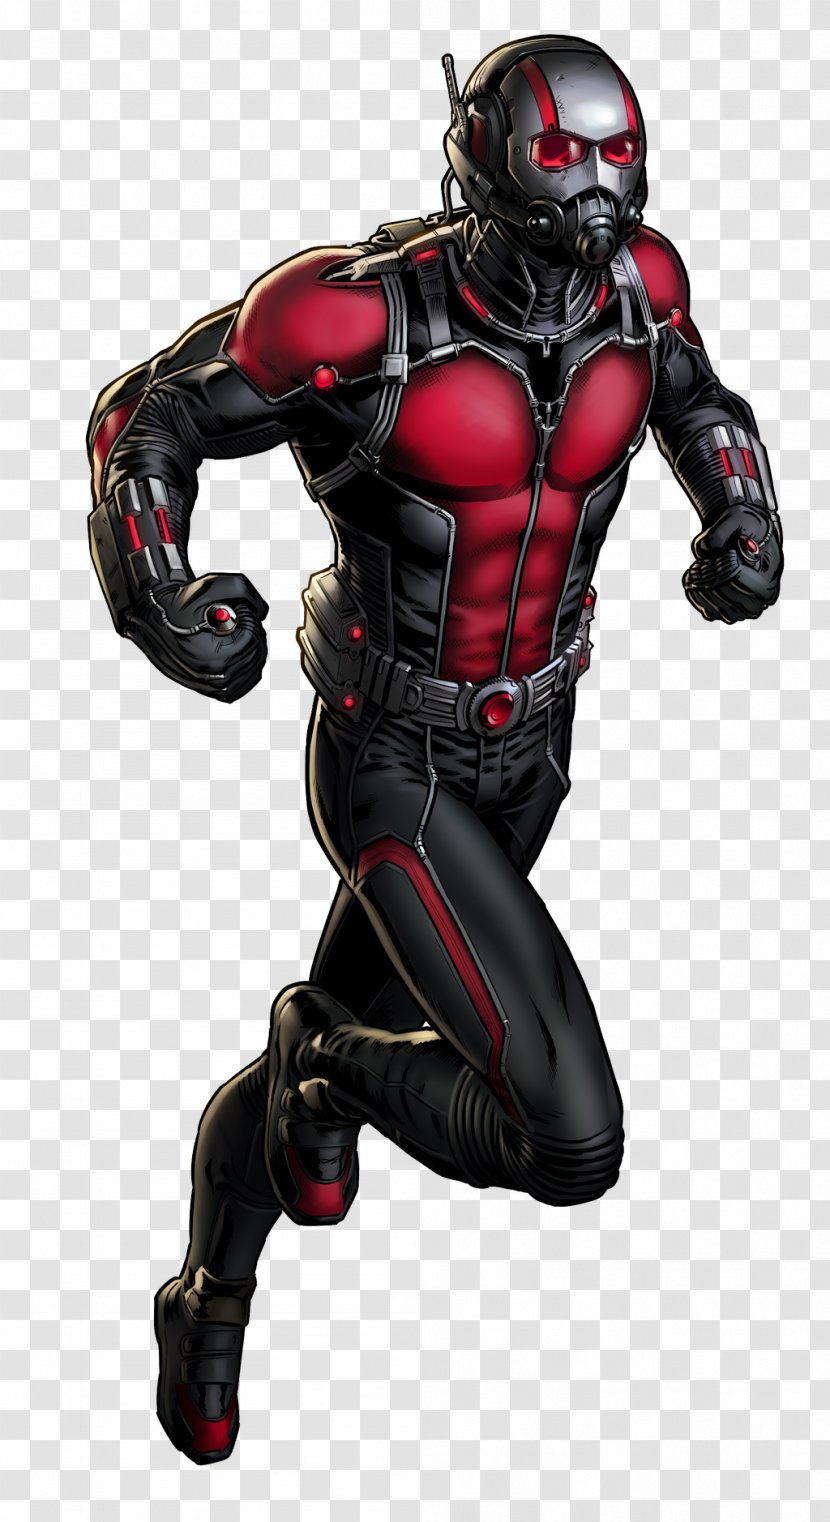 Marvel: Avengers Alliance Ant-Man Spider-Man Hank Pym Hulk - Comics - High-Quality Transparent PNG